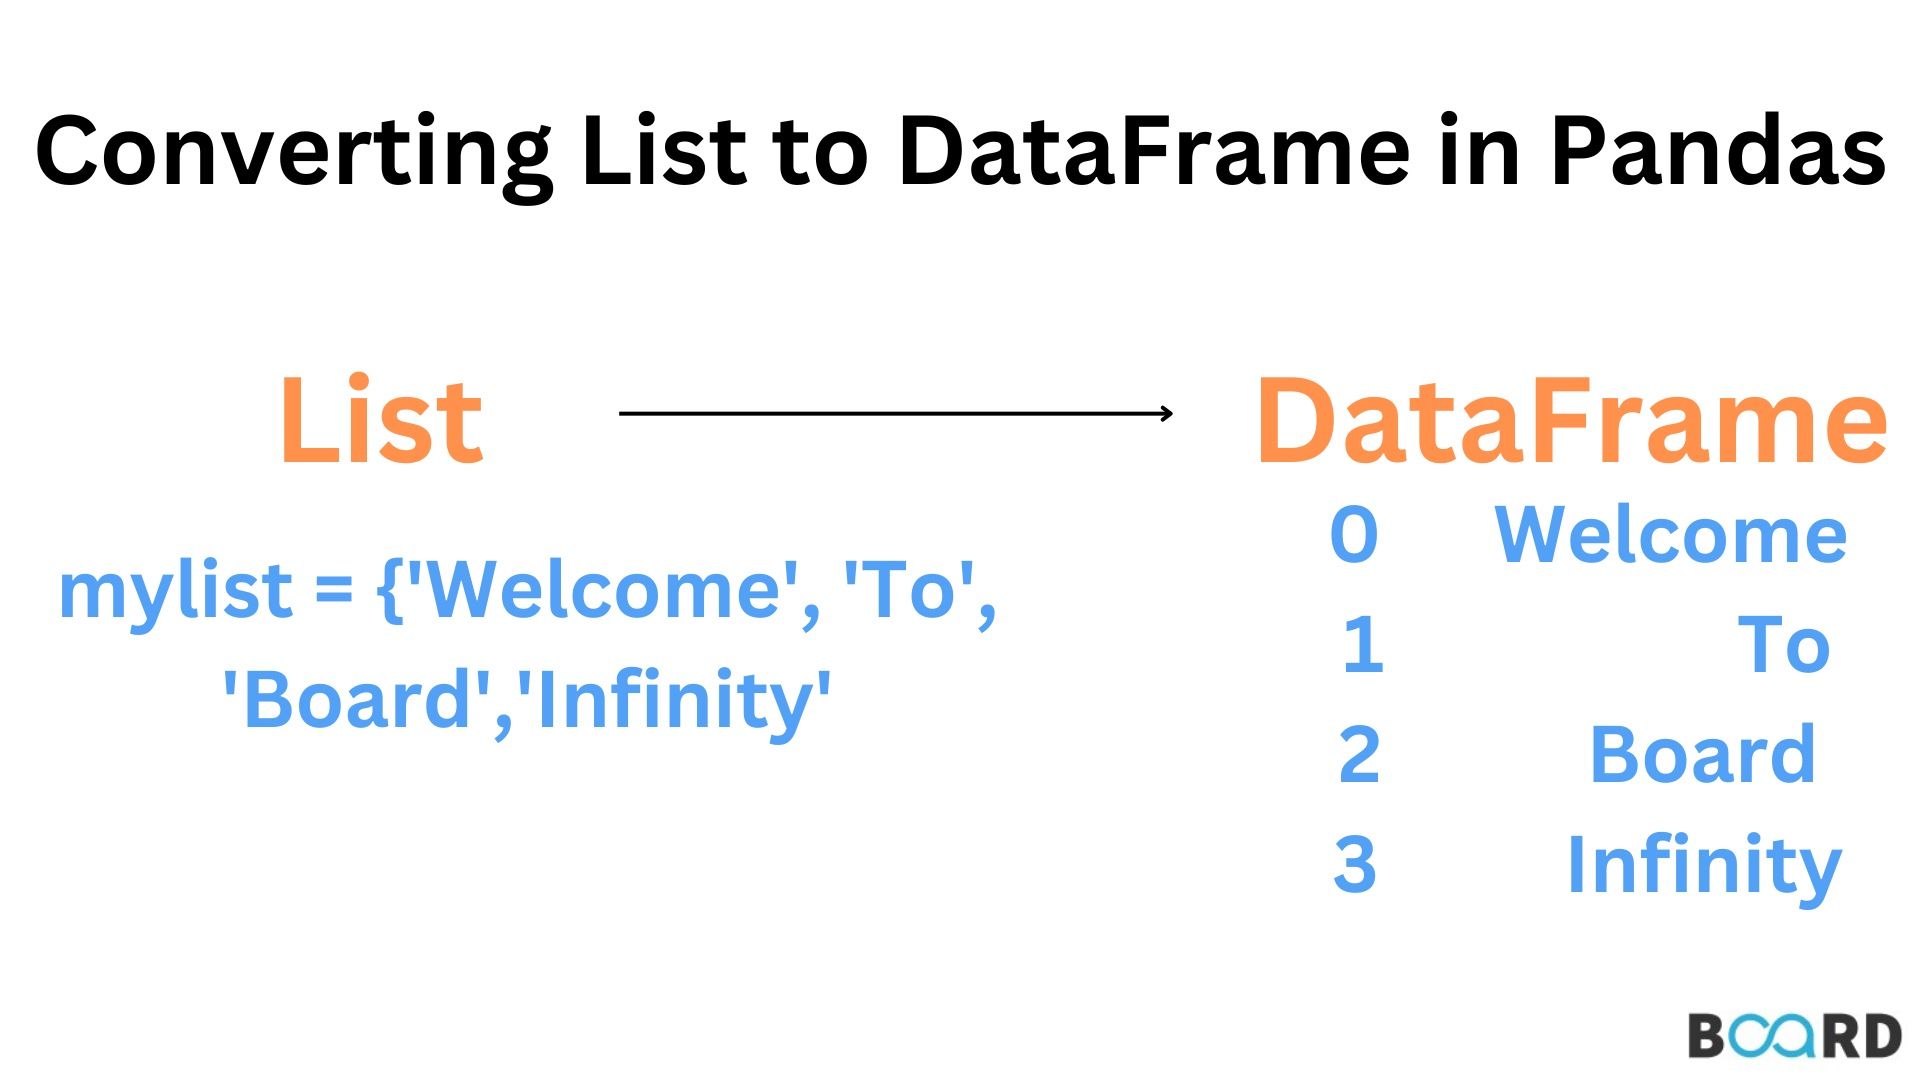 Converting List to DataFrames in Pandas